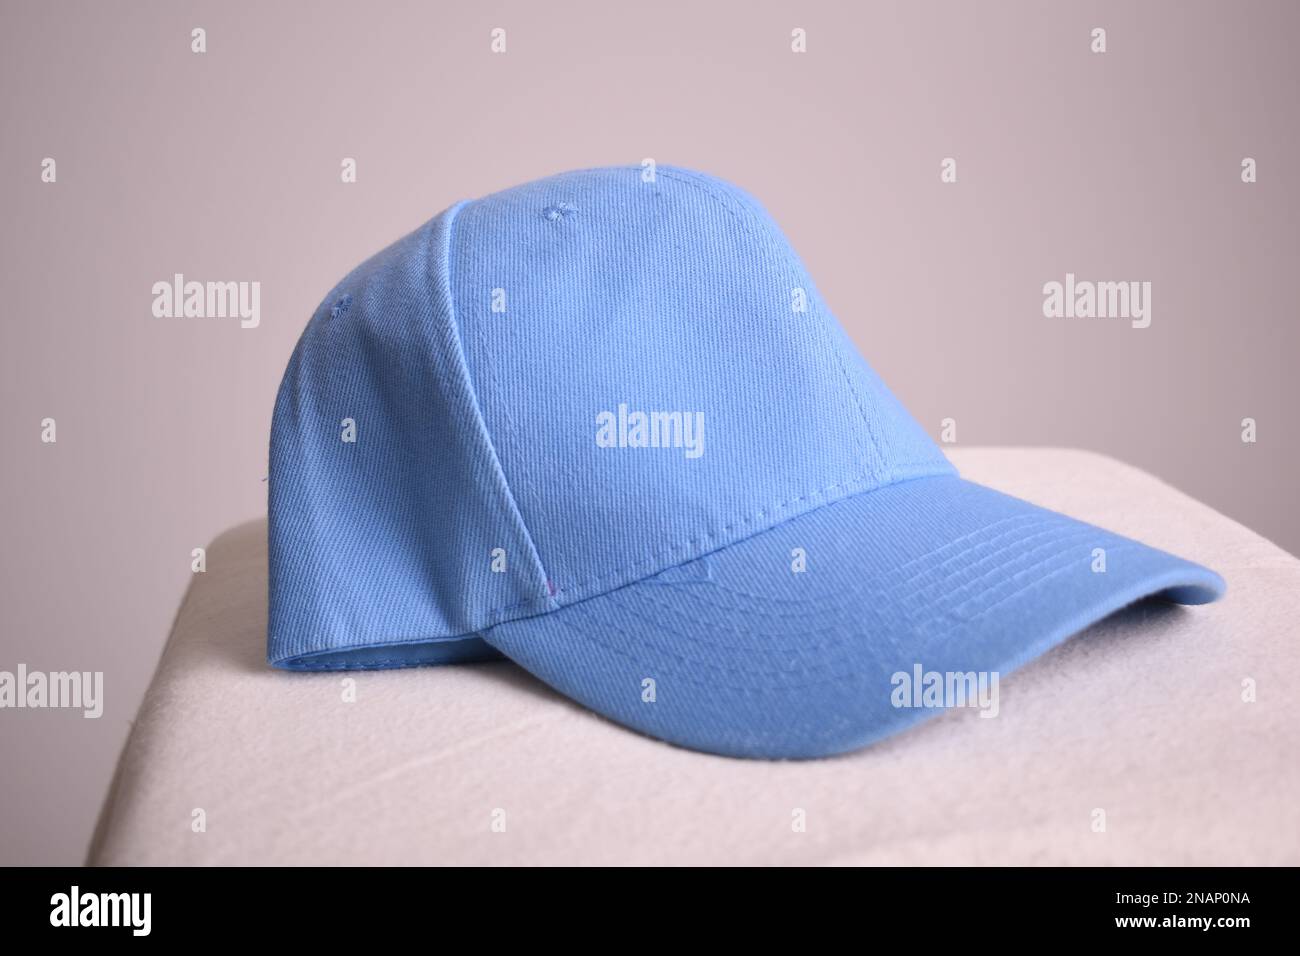 Blue cap/hat high resolution image Stock Photo